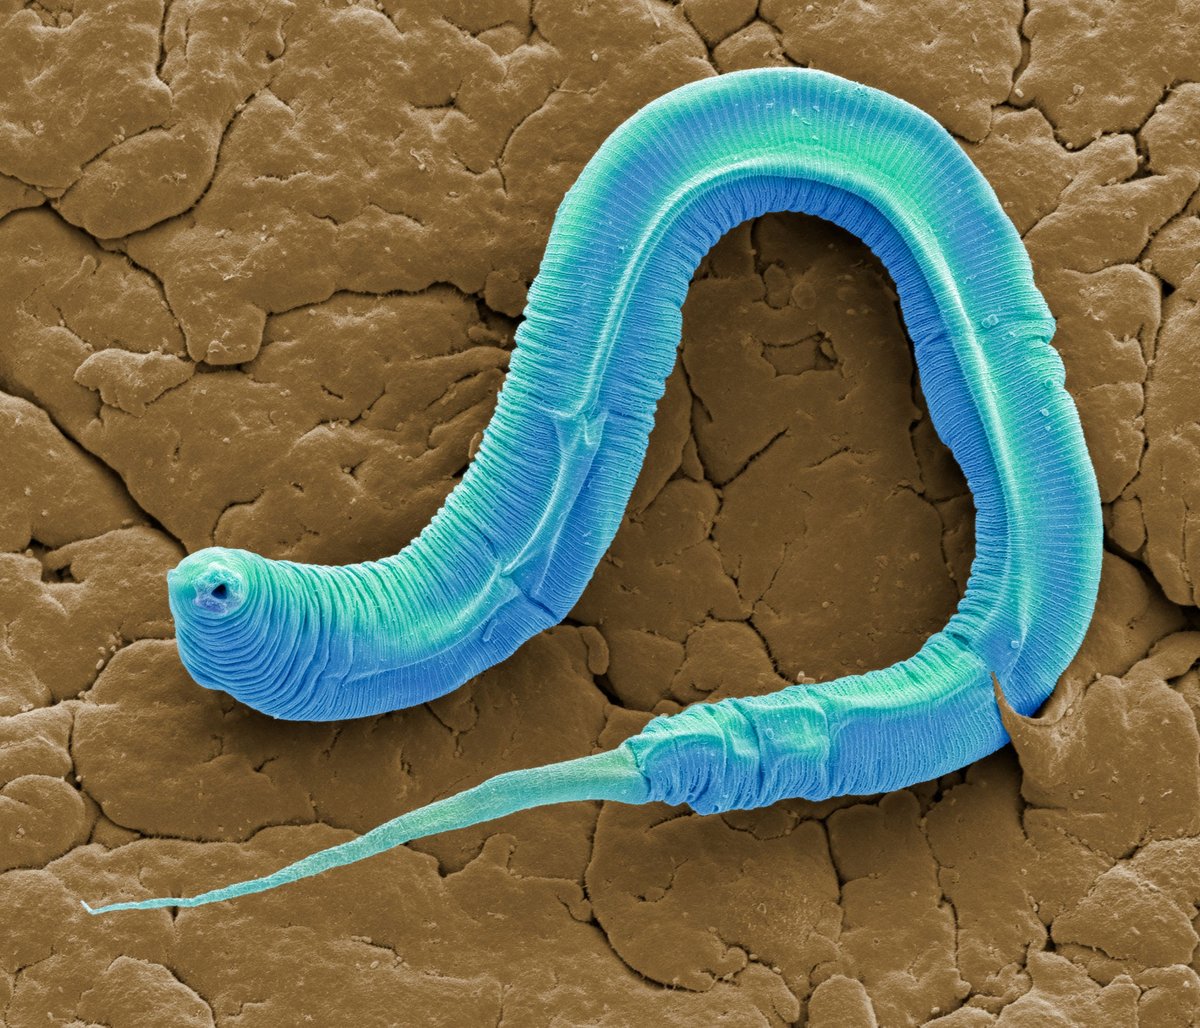  Caenorhabditis elegans, petit nématode bactérivore  © Science & Vie n°1237, Octobre 2020